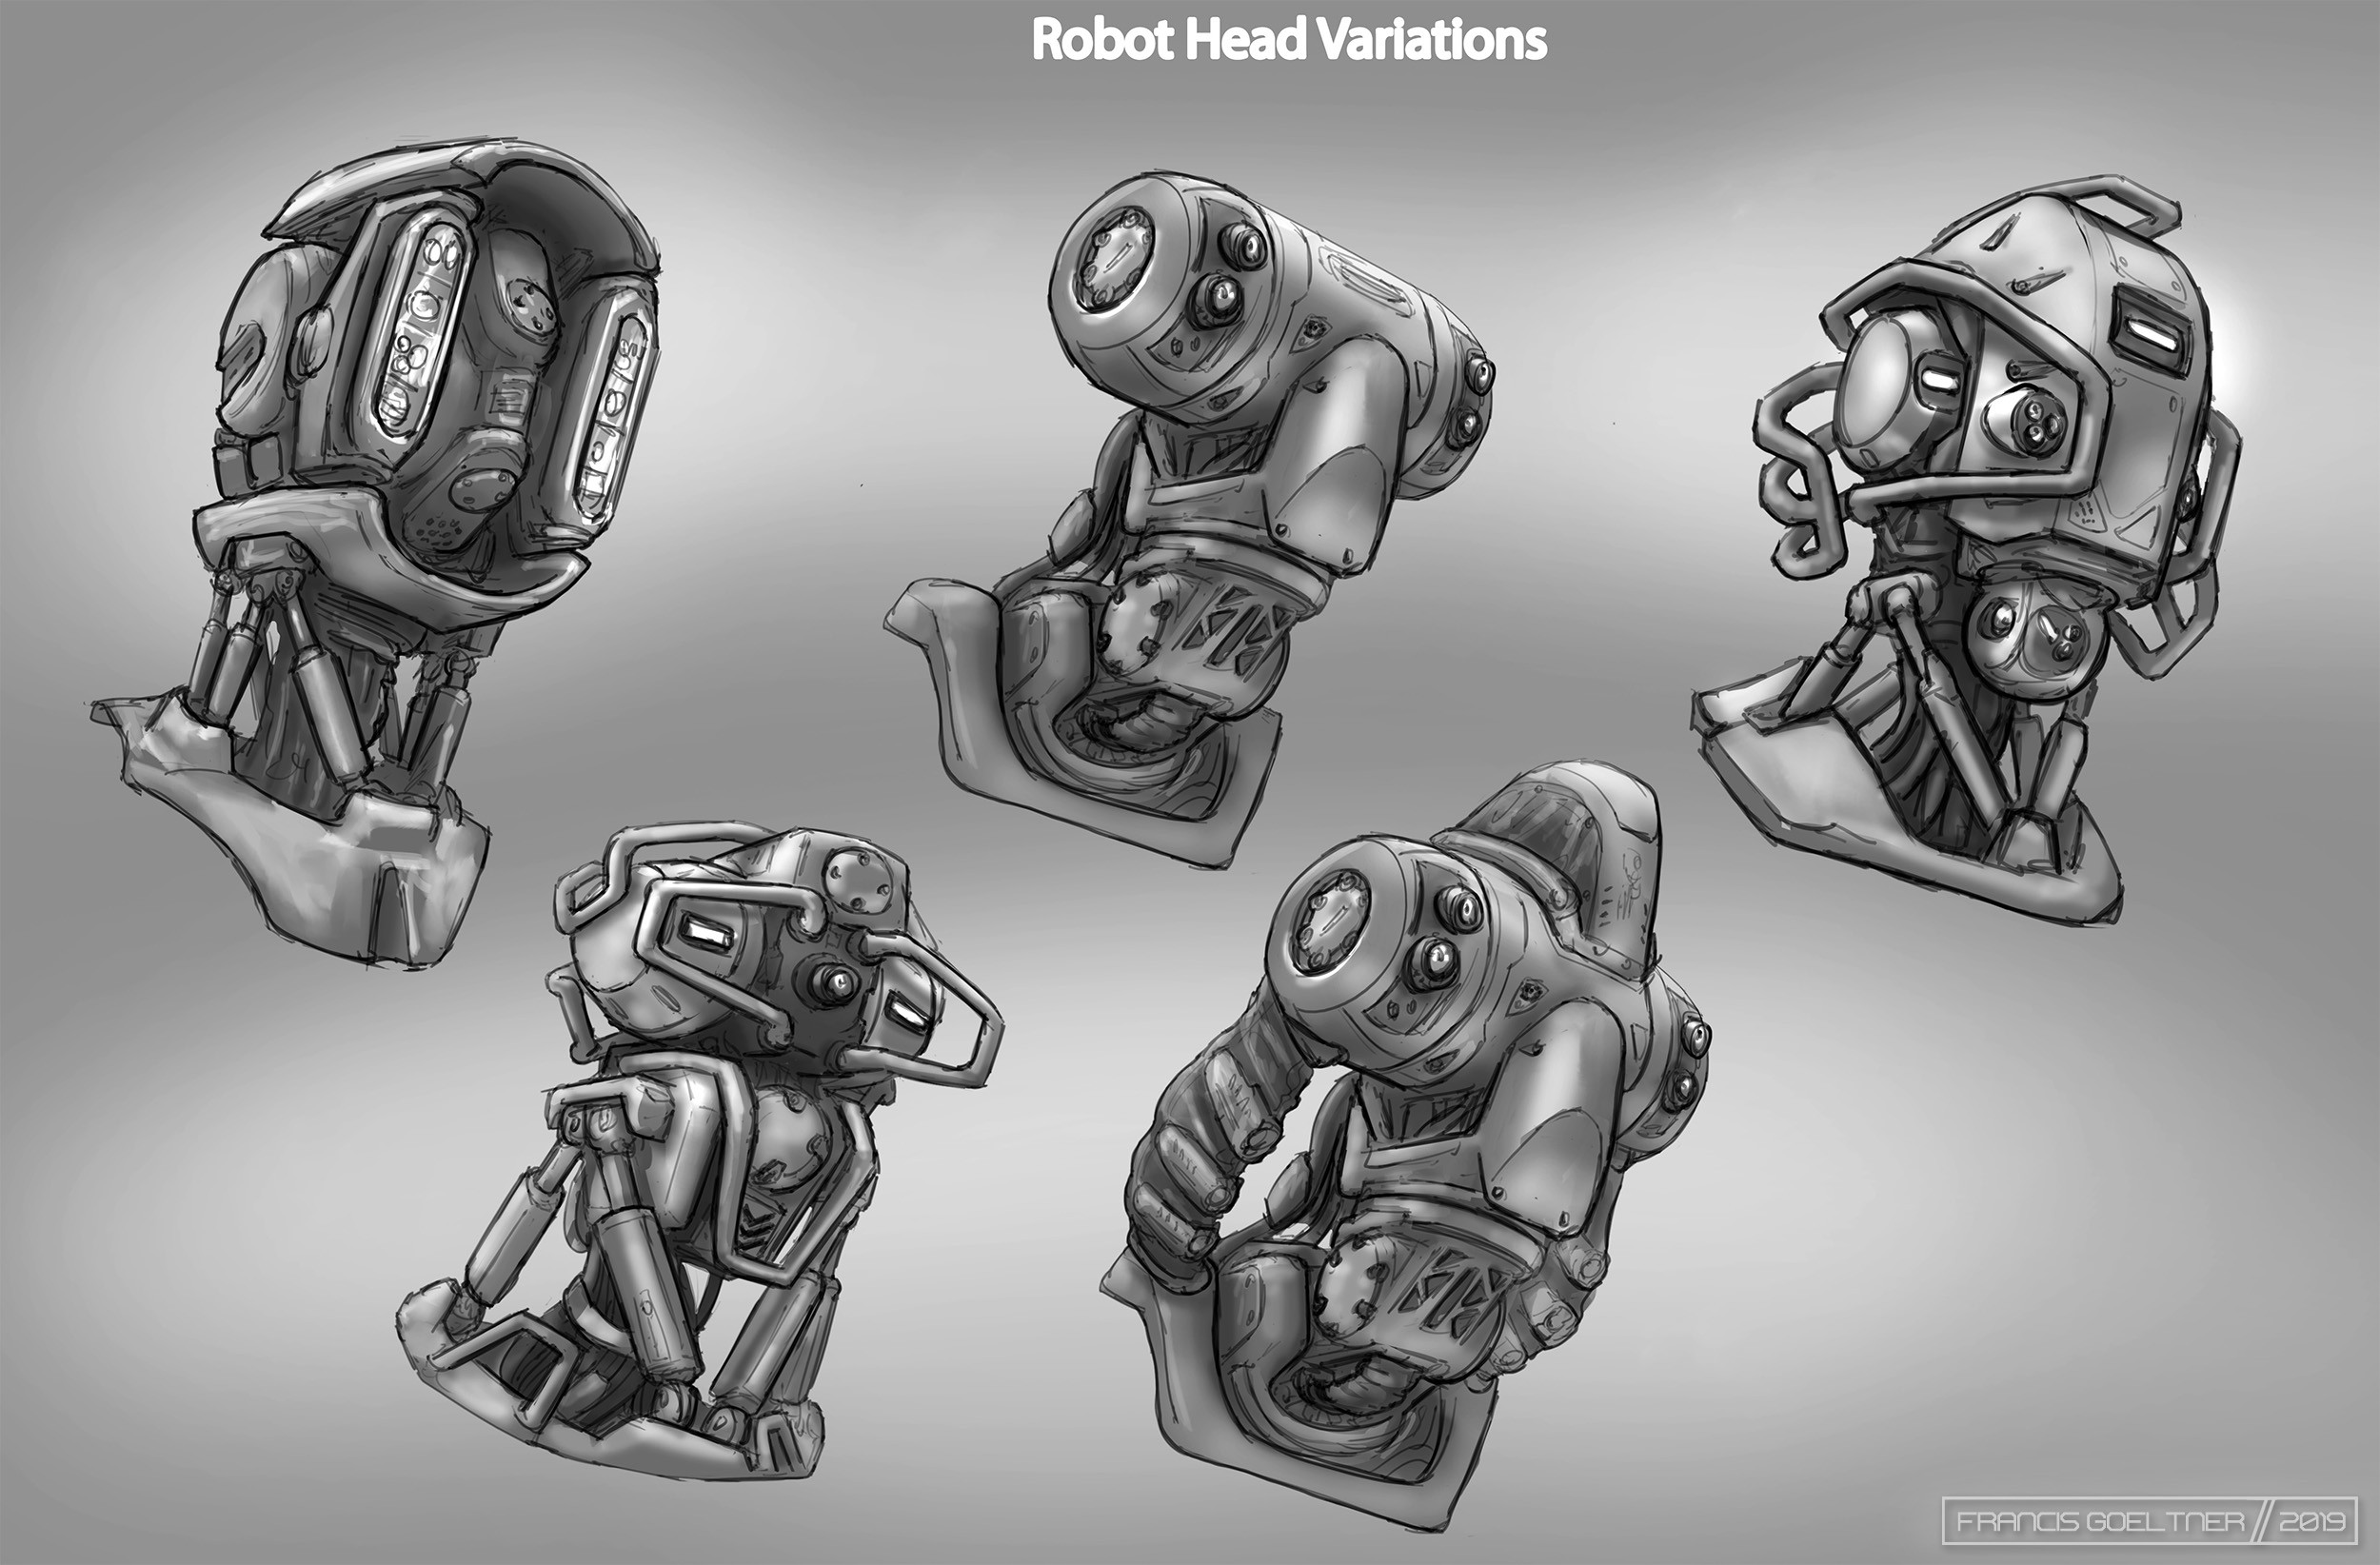 Exploratory sketches of head designs